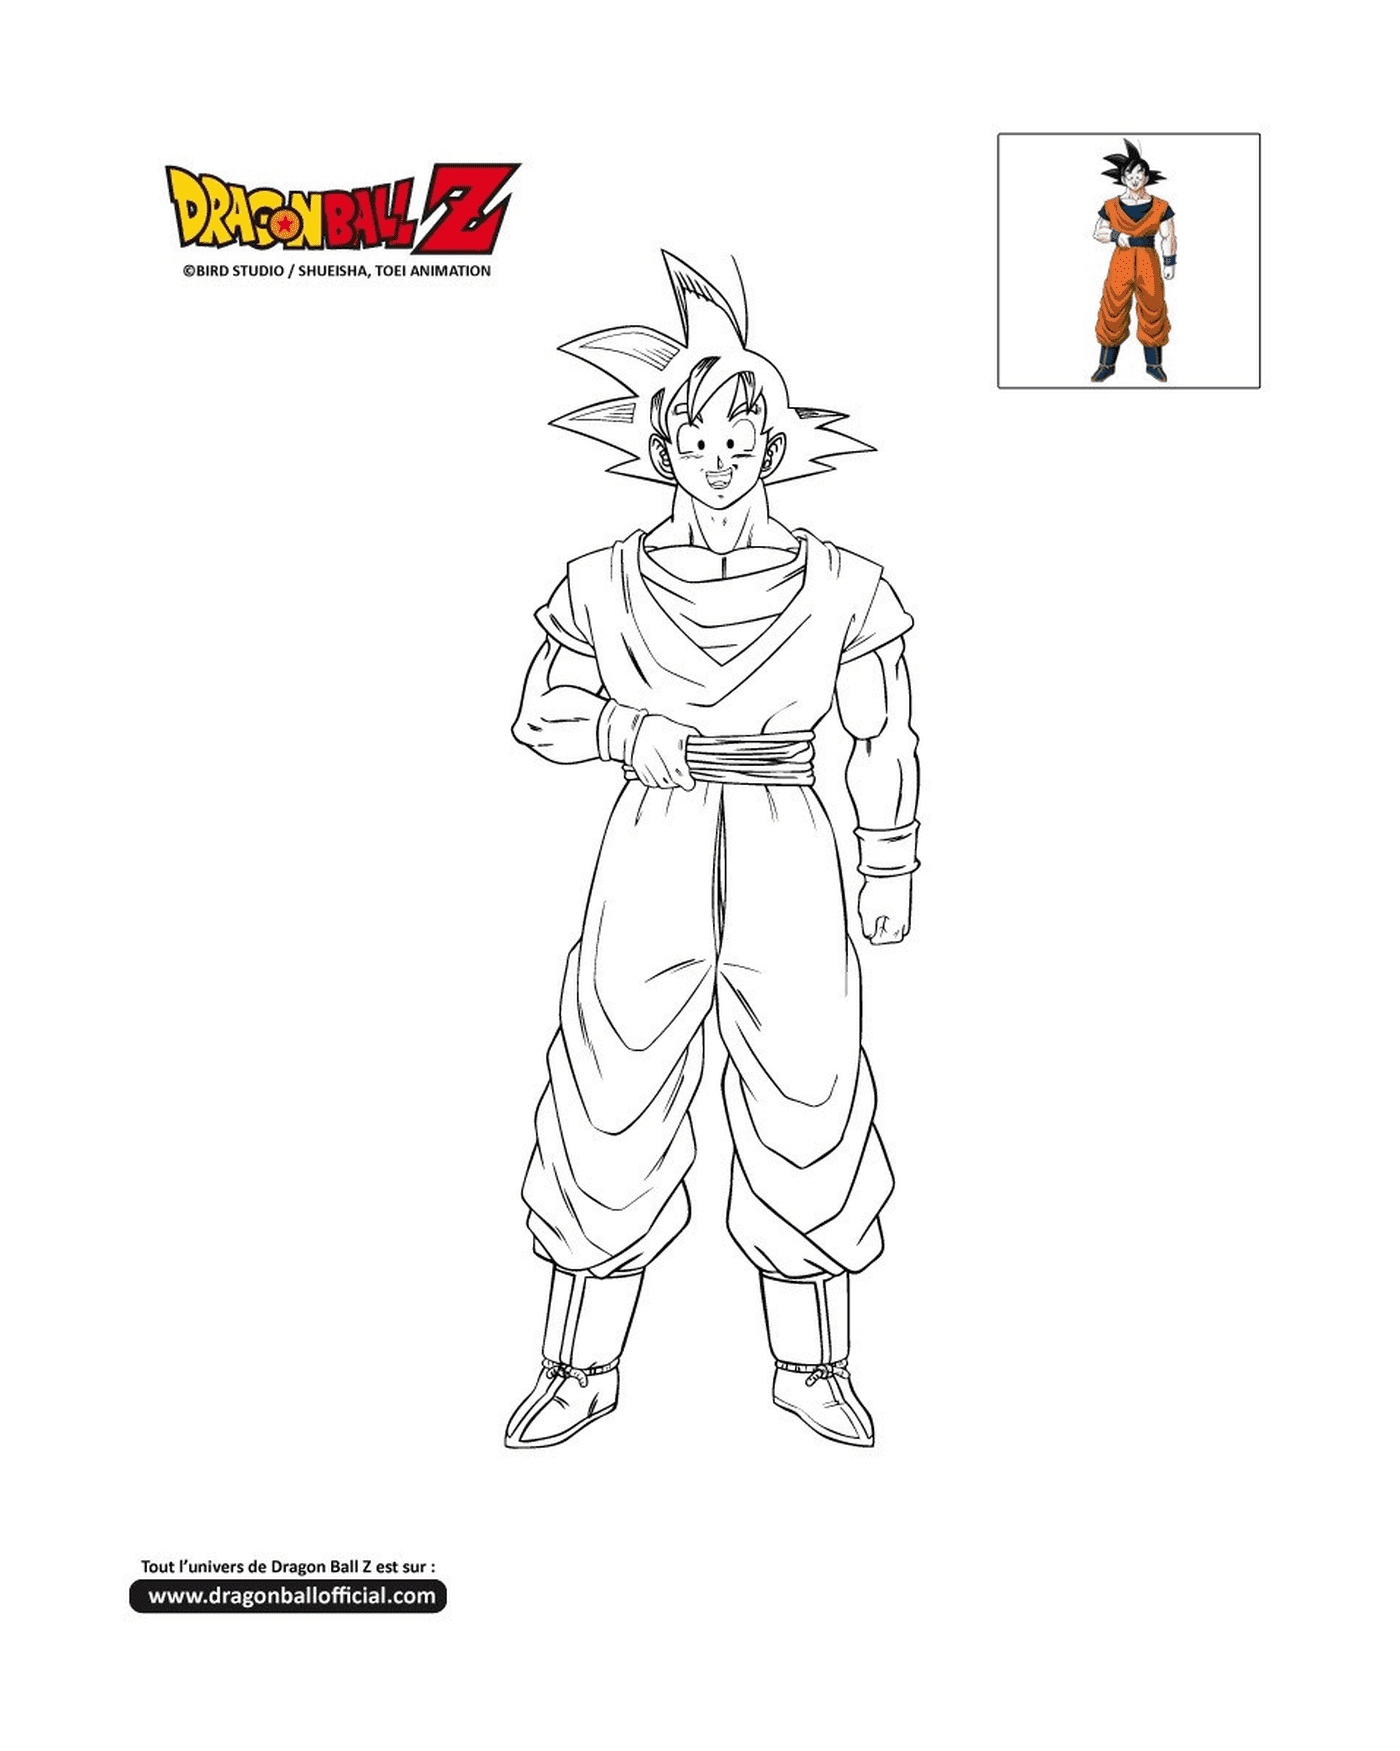  Goku, a man dressed as a Dragon Ball Z 